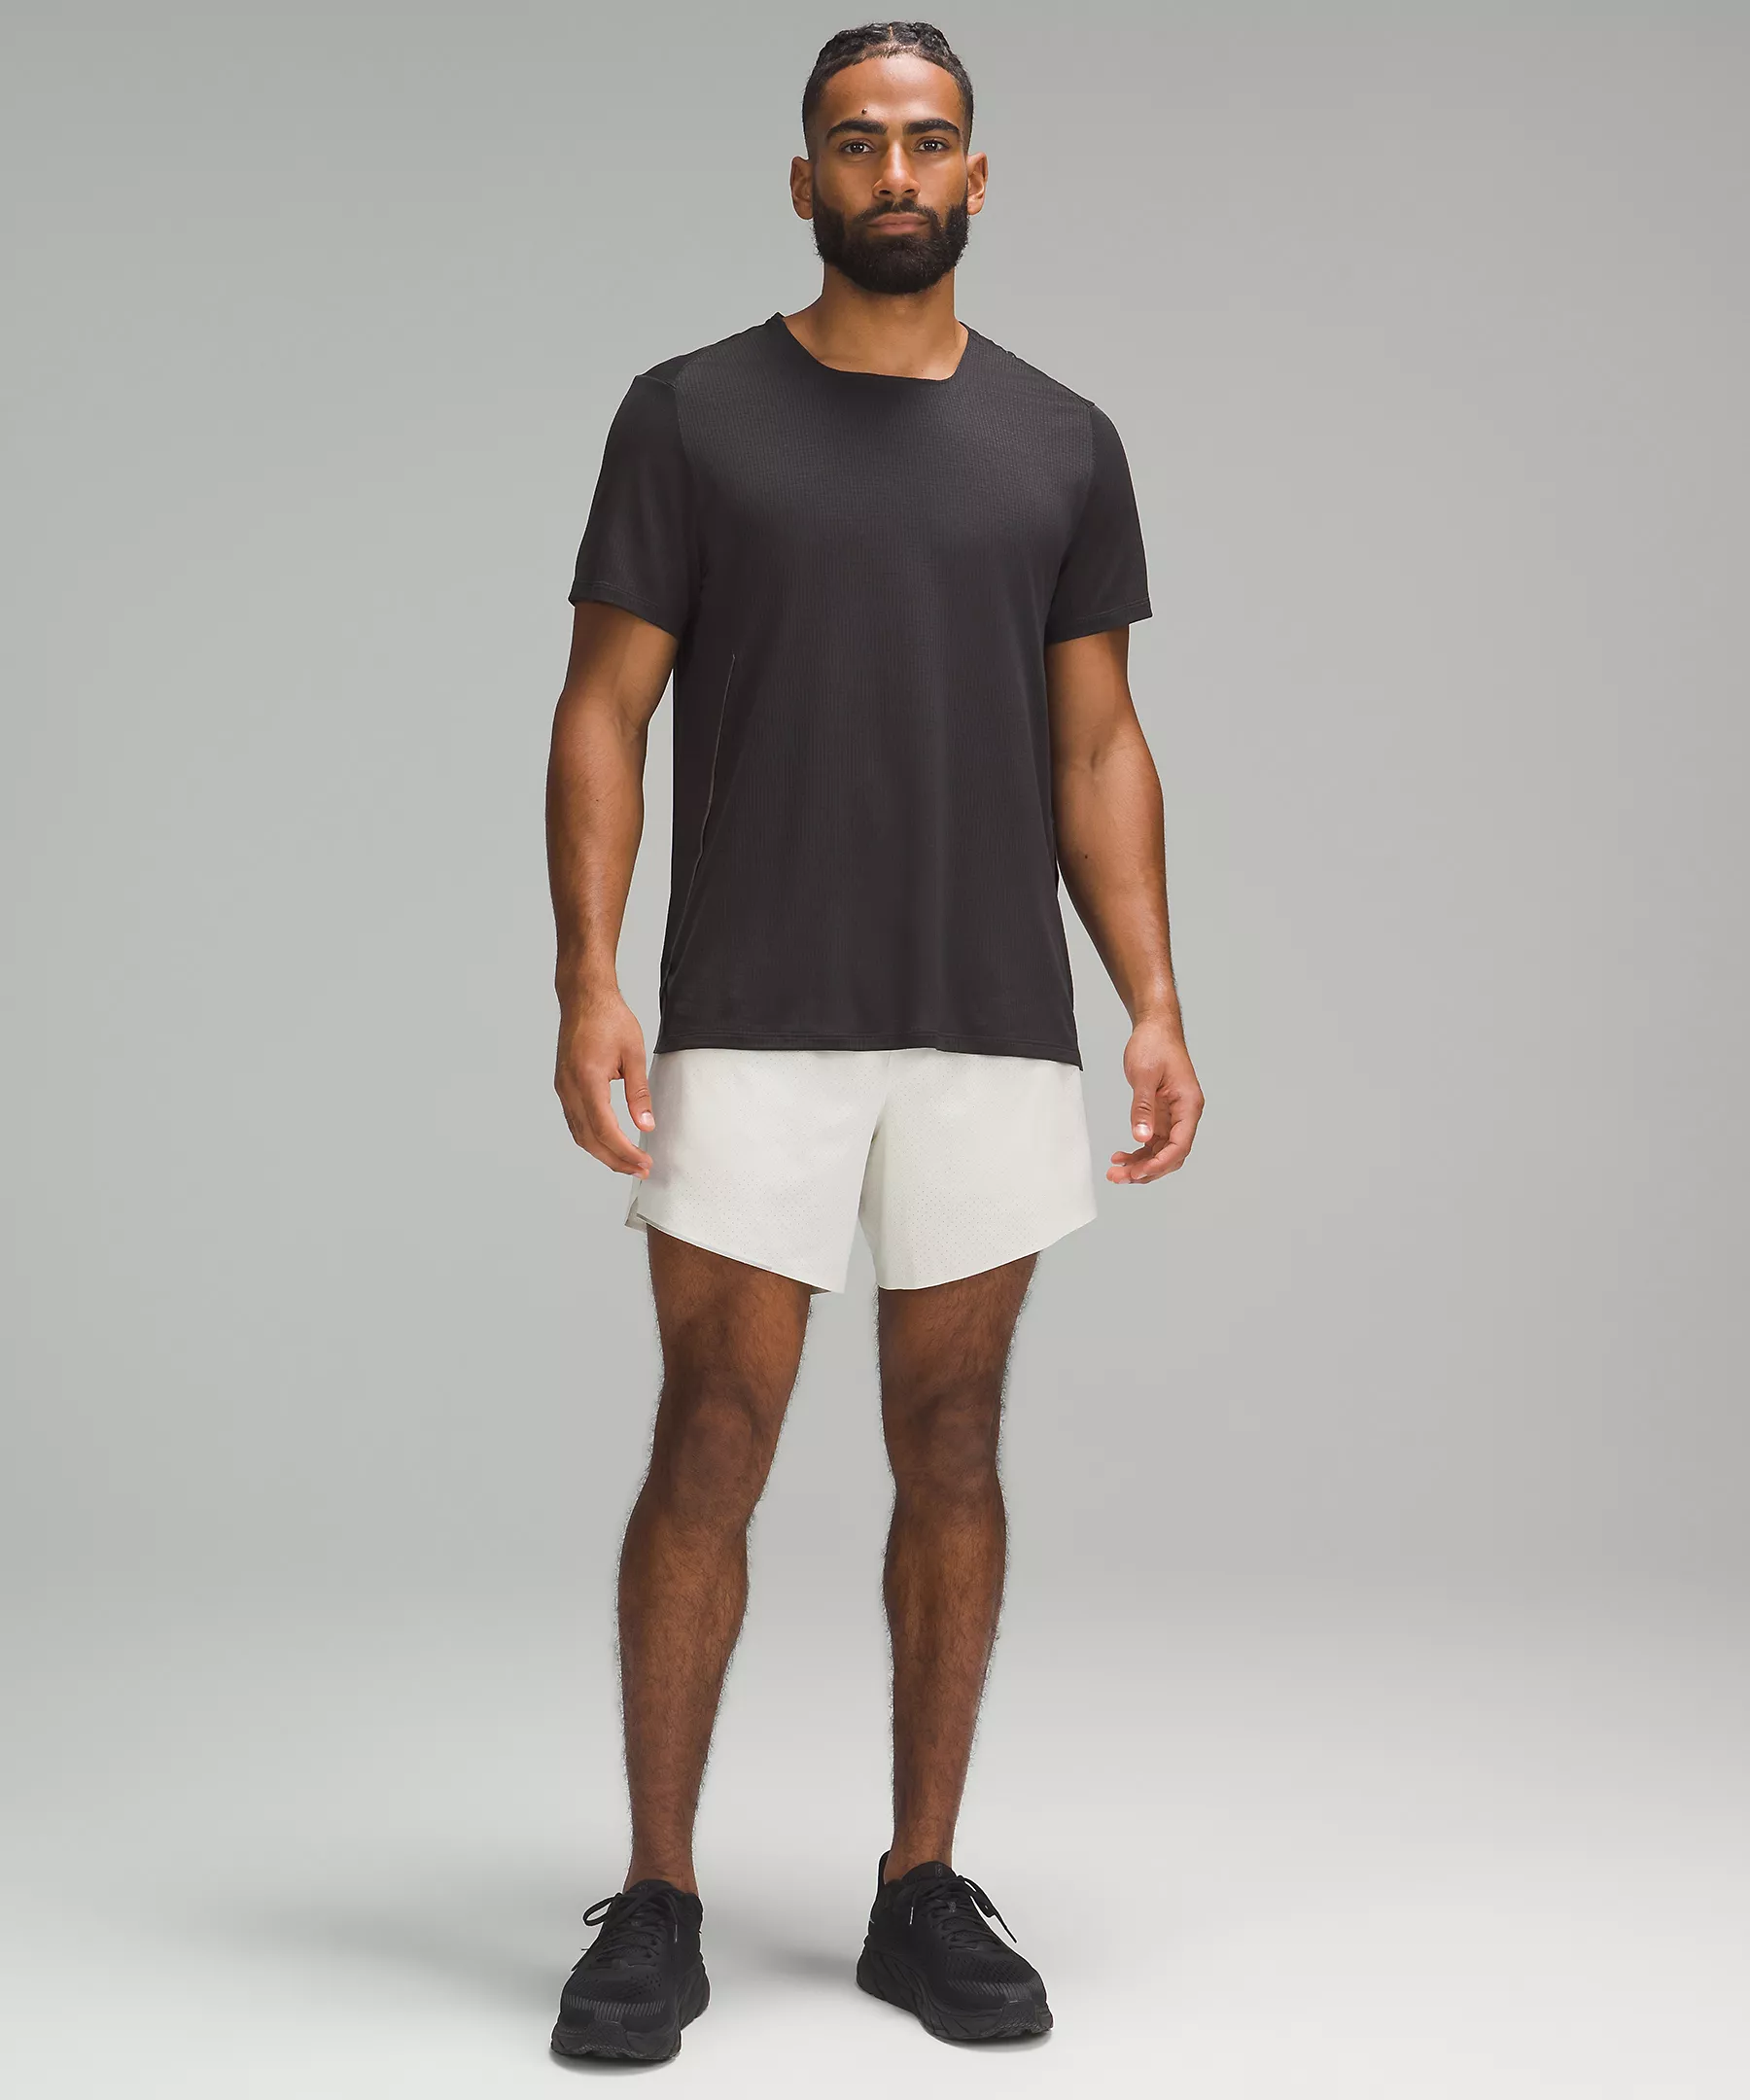 A photo of a man wearing the white lulu lemon sport shorts